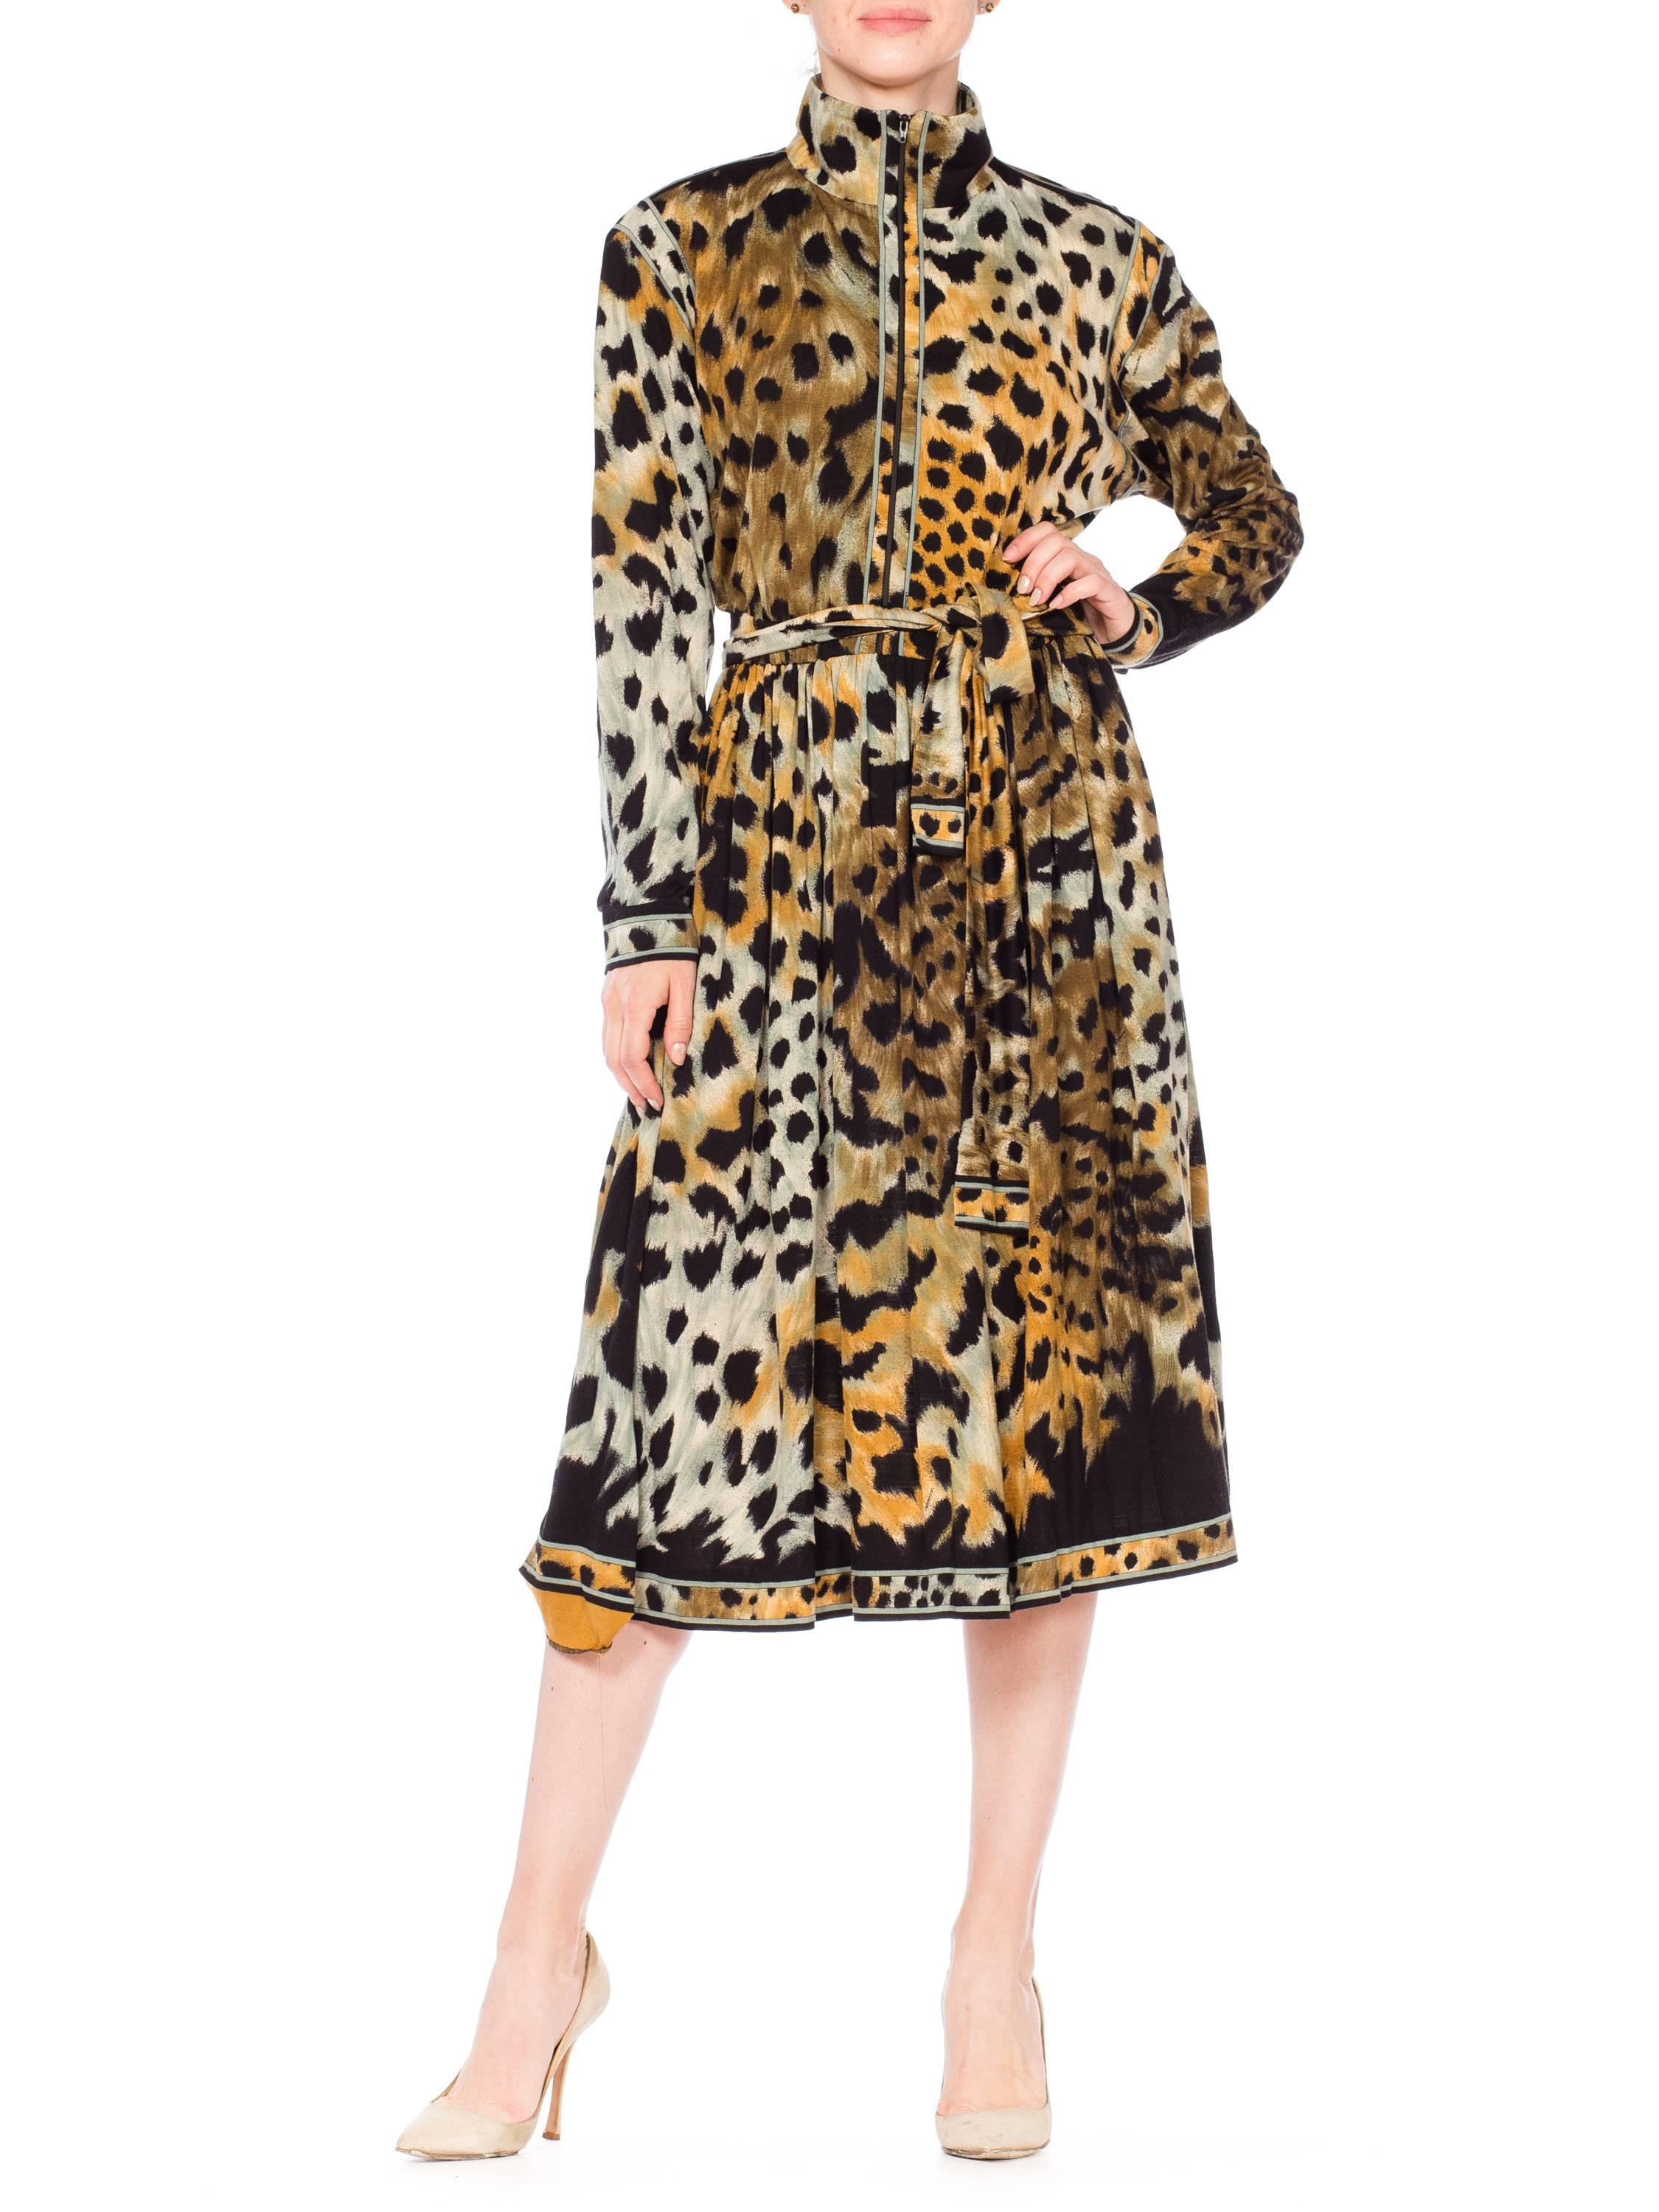 Leopard Print Leonard French Jersey Dress 6